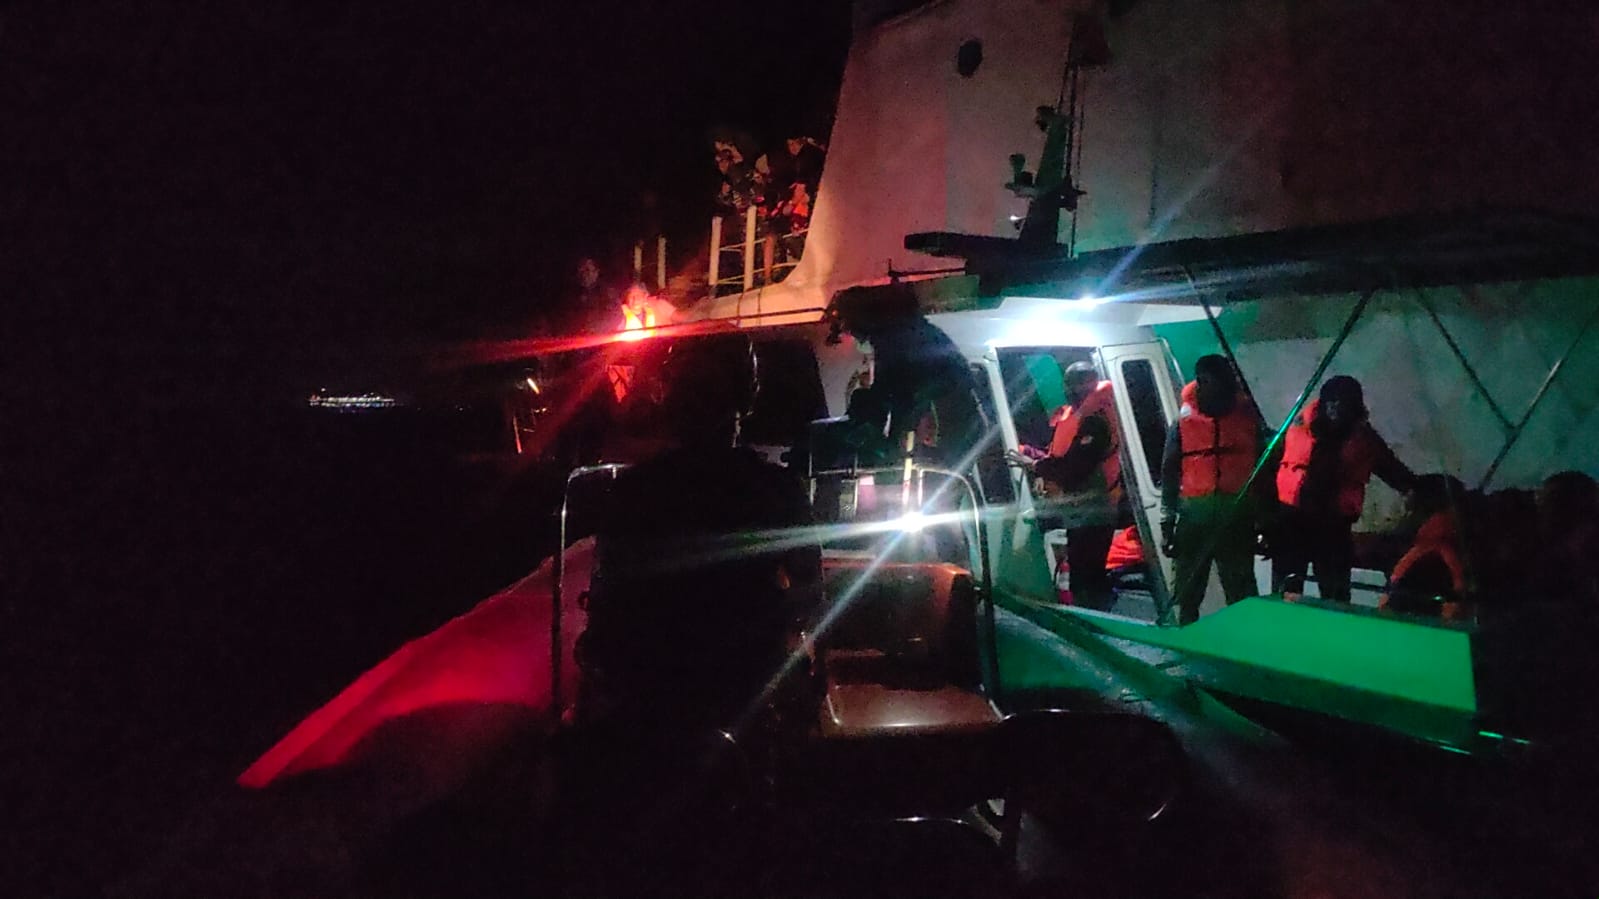 Untung Selamat, Kapal Penumpang Mati Mesin Di Perairan Gilimanuk